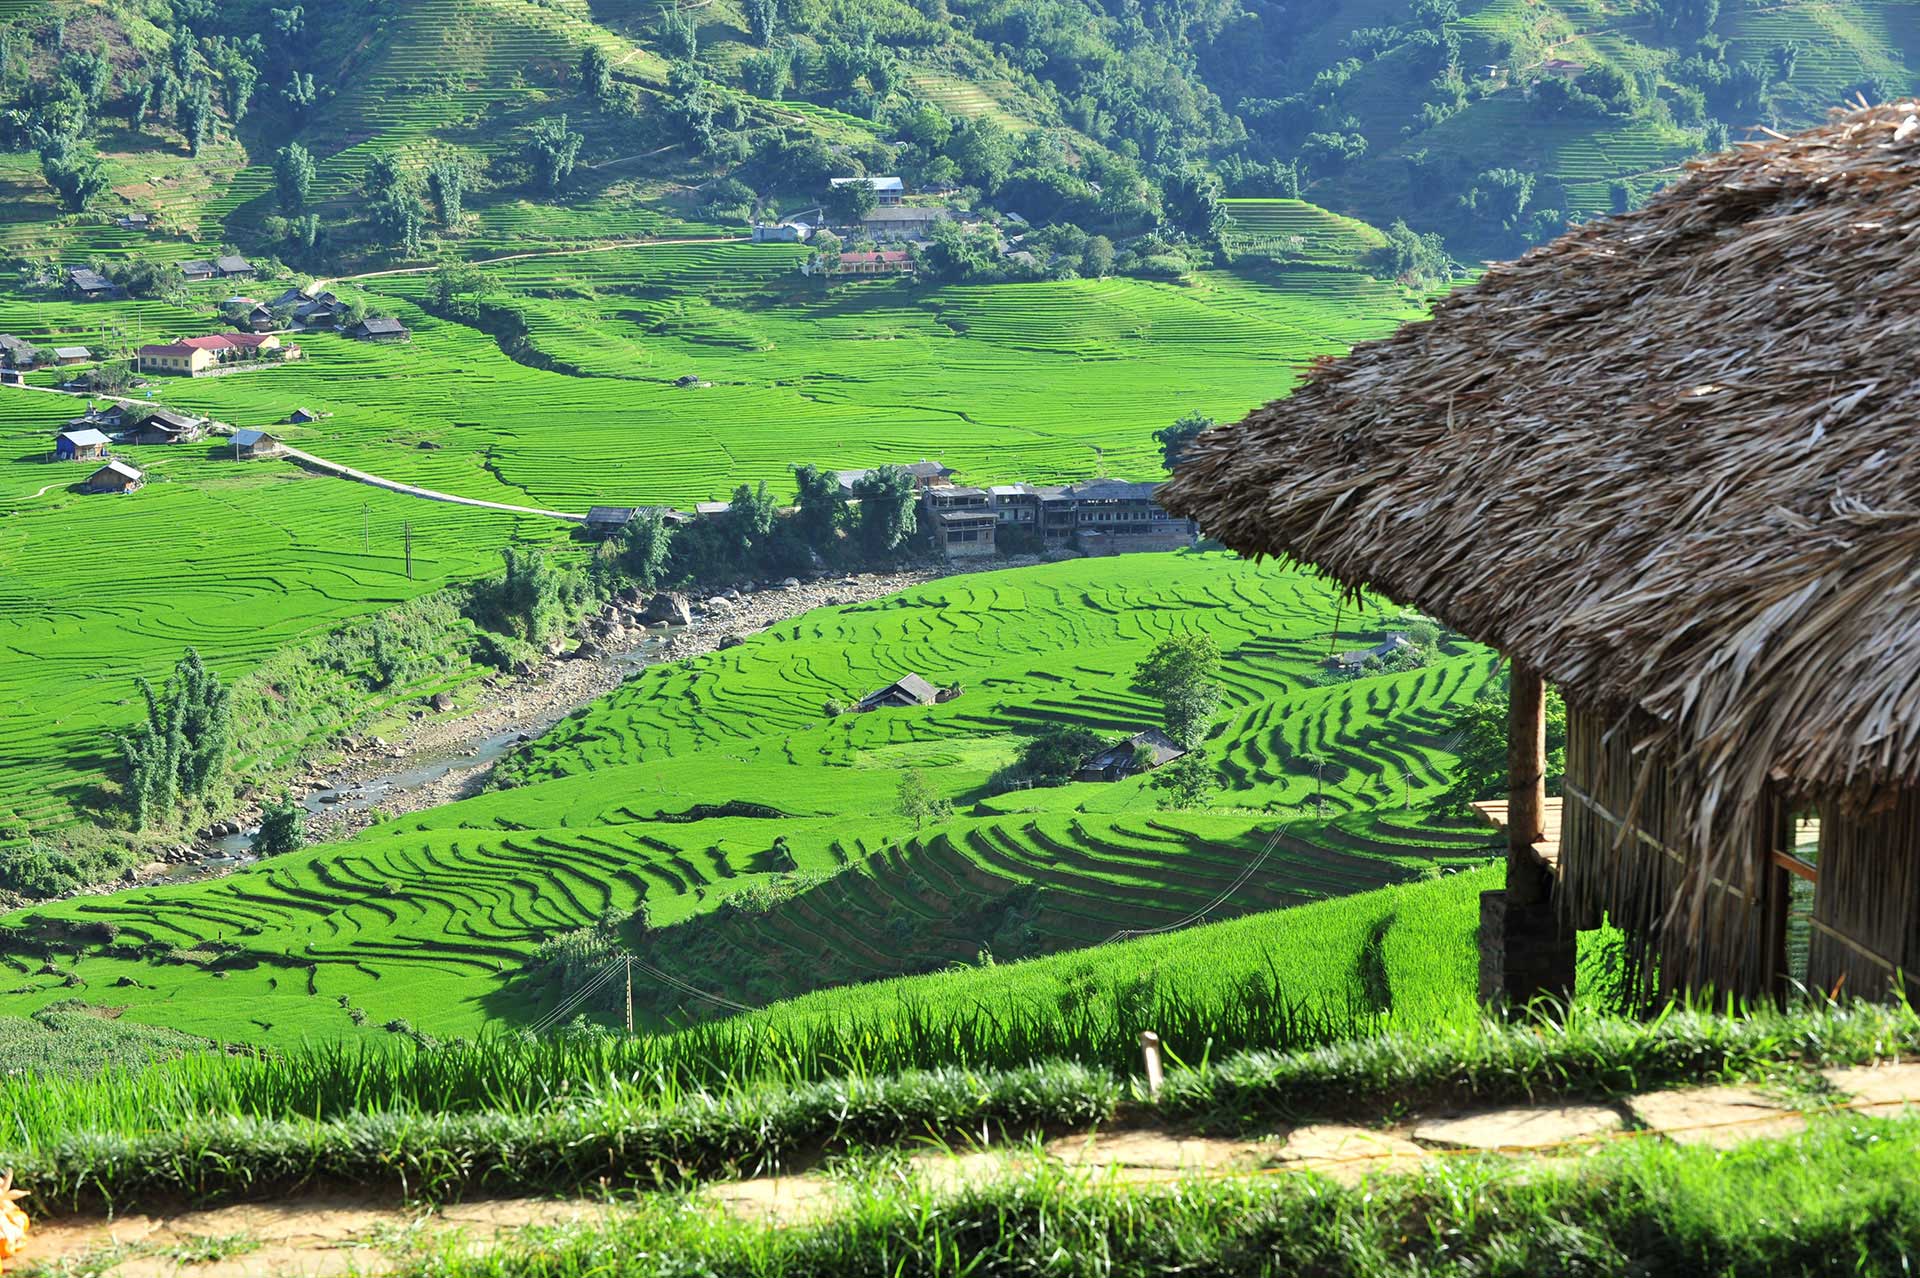 How to get Vietnam visa online to travel to visit Ta Van village